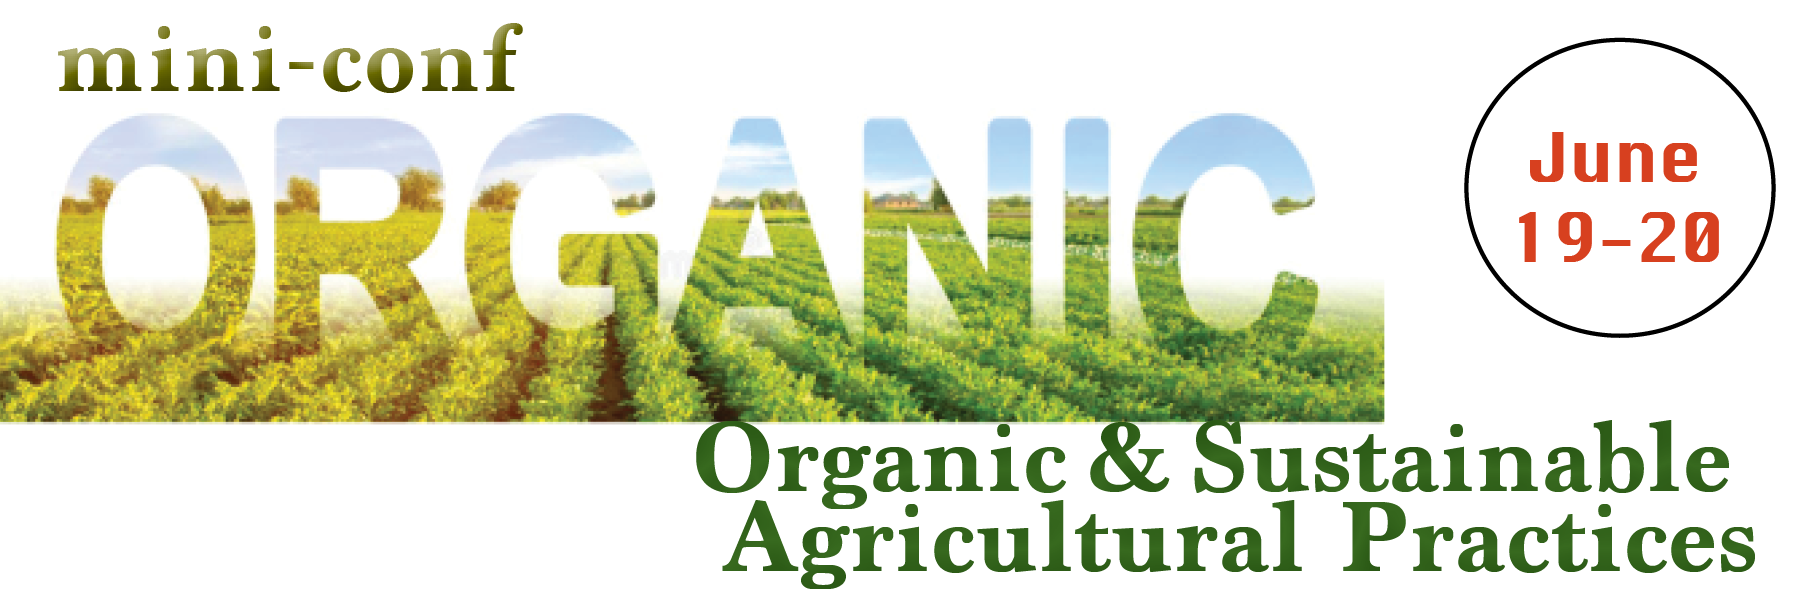 Organic sustainable ag, June 19-20